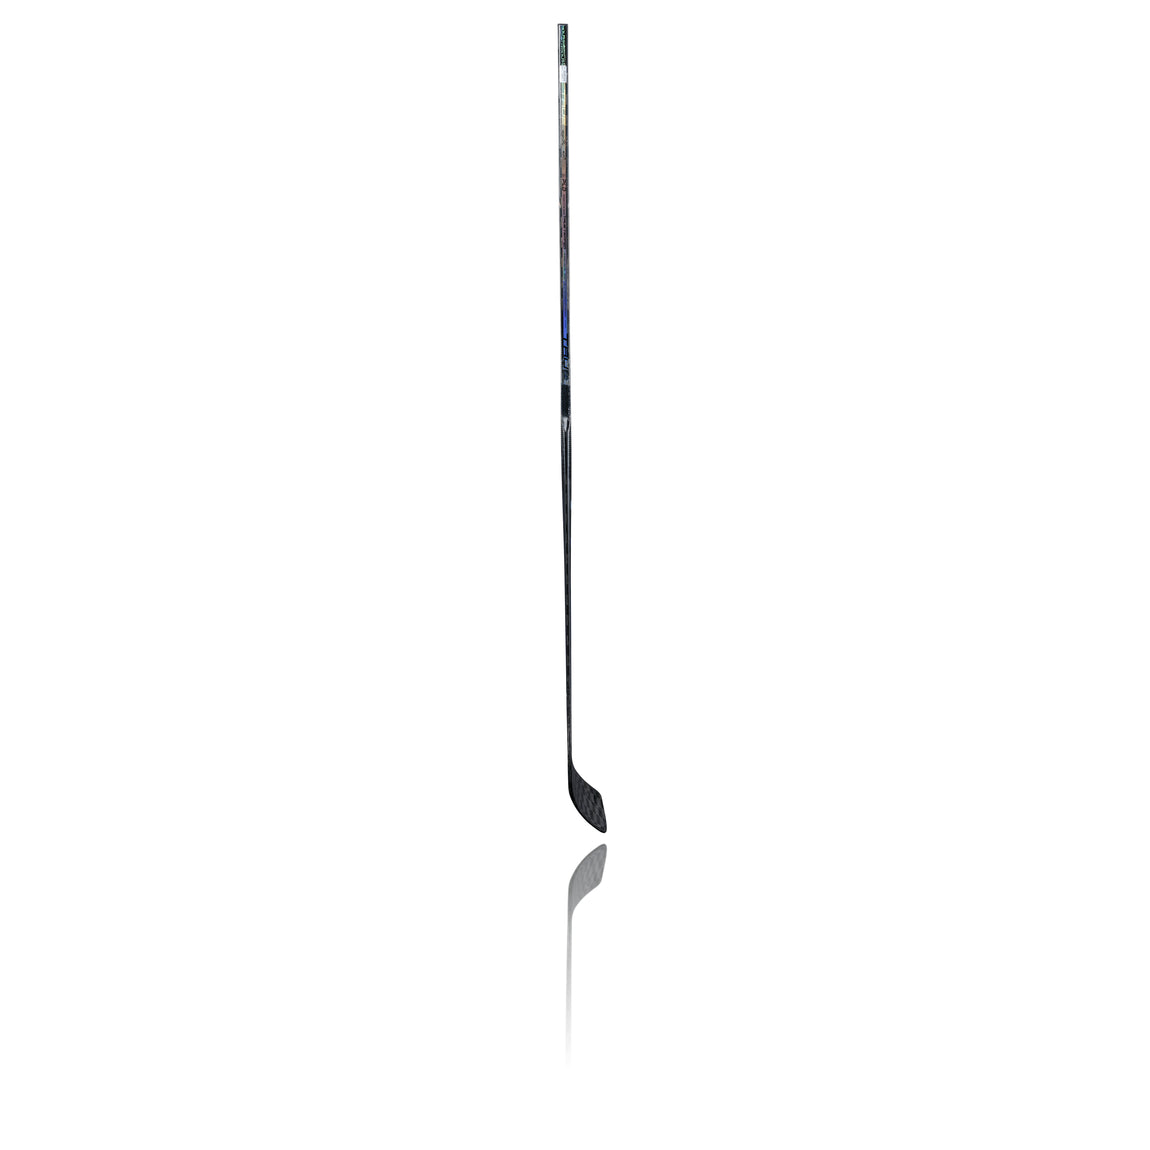 True HZRDUS 9X4 Goalie Stick - Senior